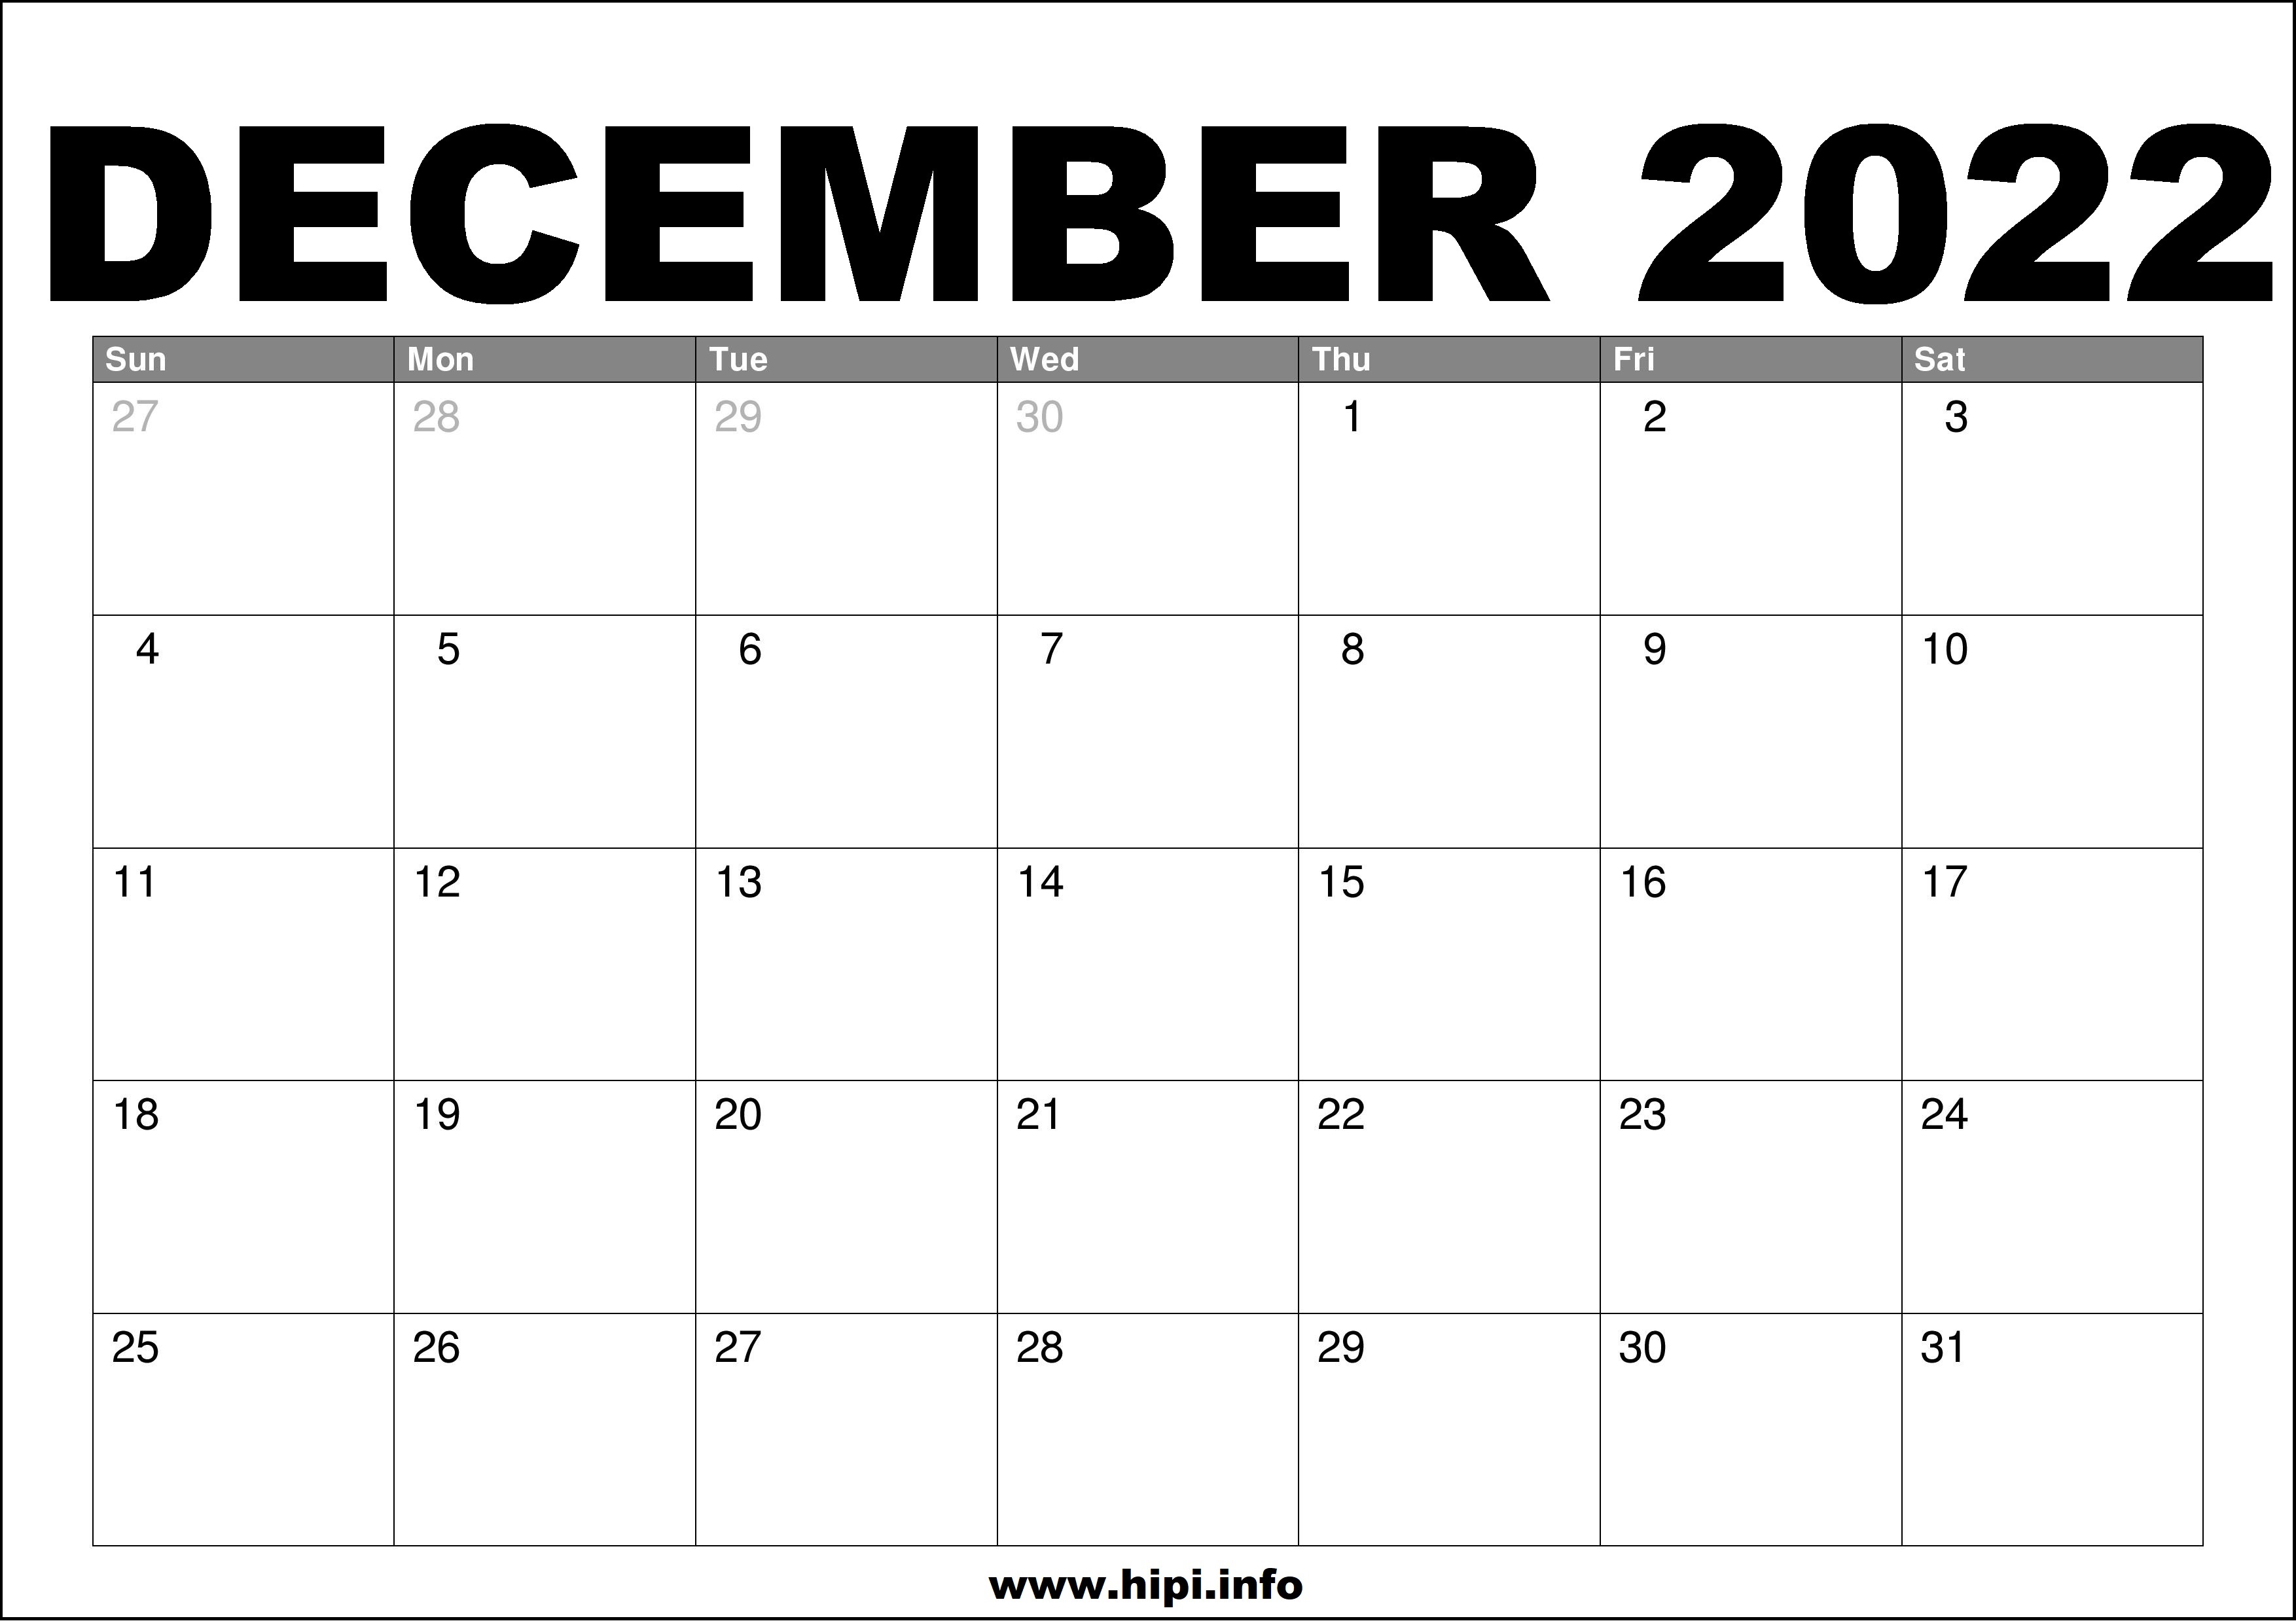 Free Printable Calendar December 2022 December 2022 Calendar Printable Free - Hipi.info | Calendars Printable Free